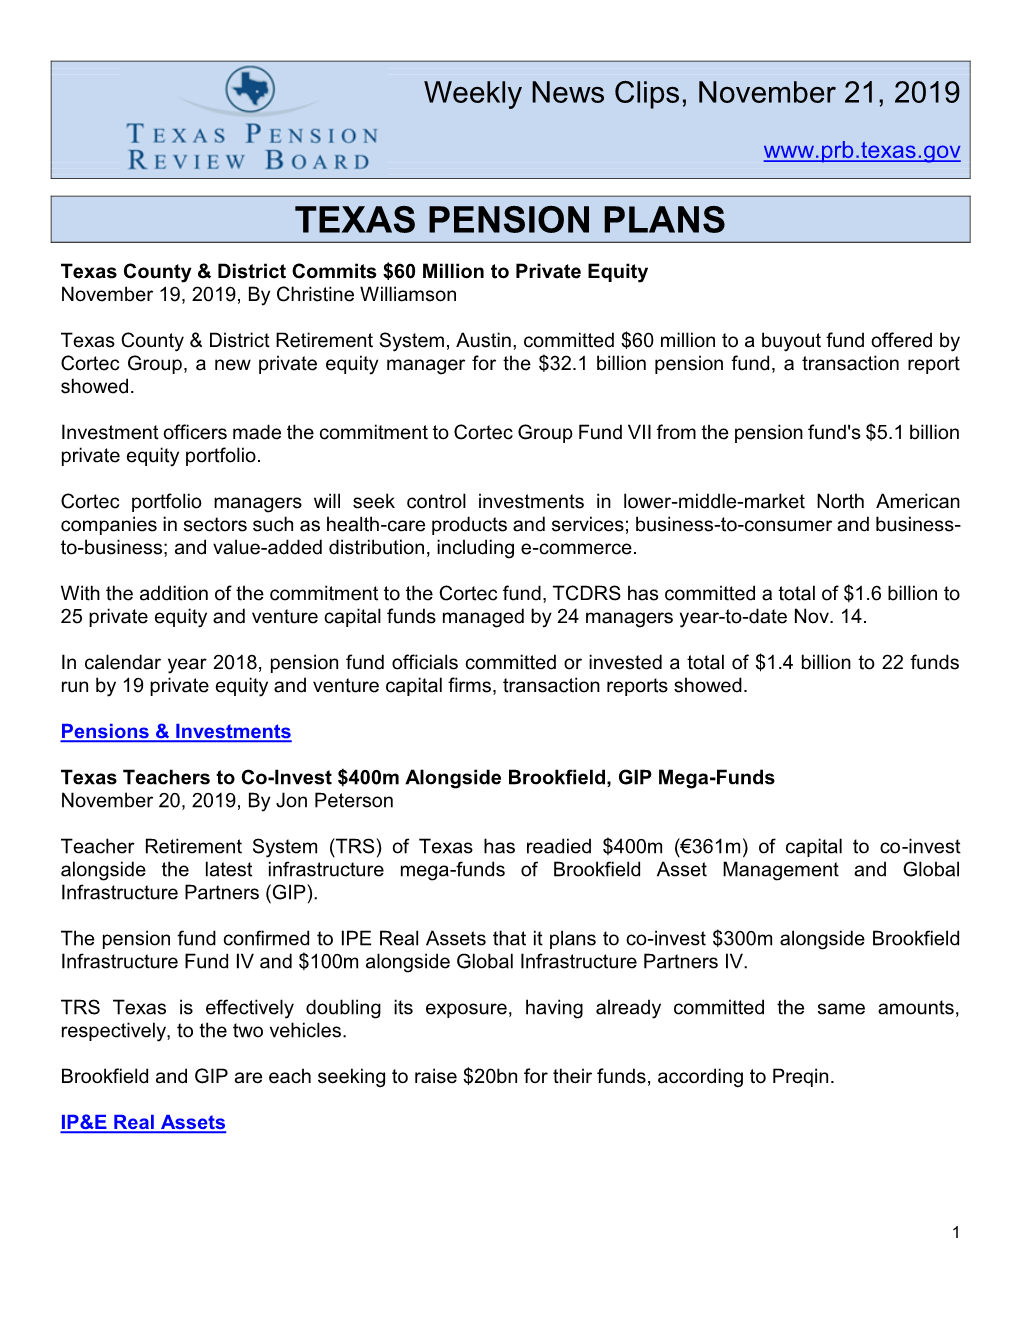 Texas Pension Plans